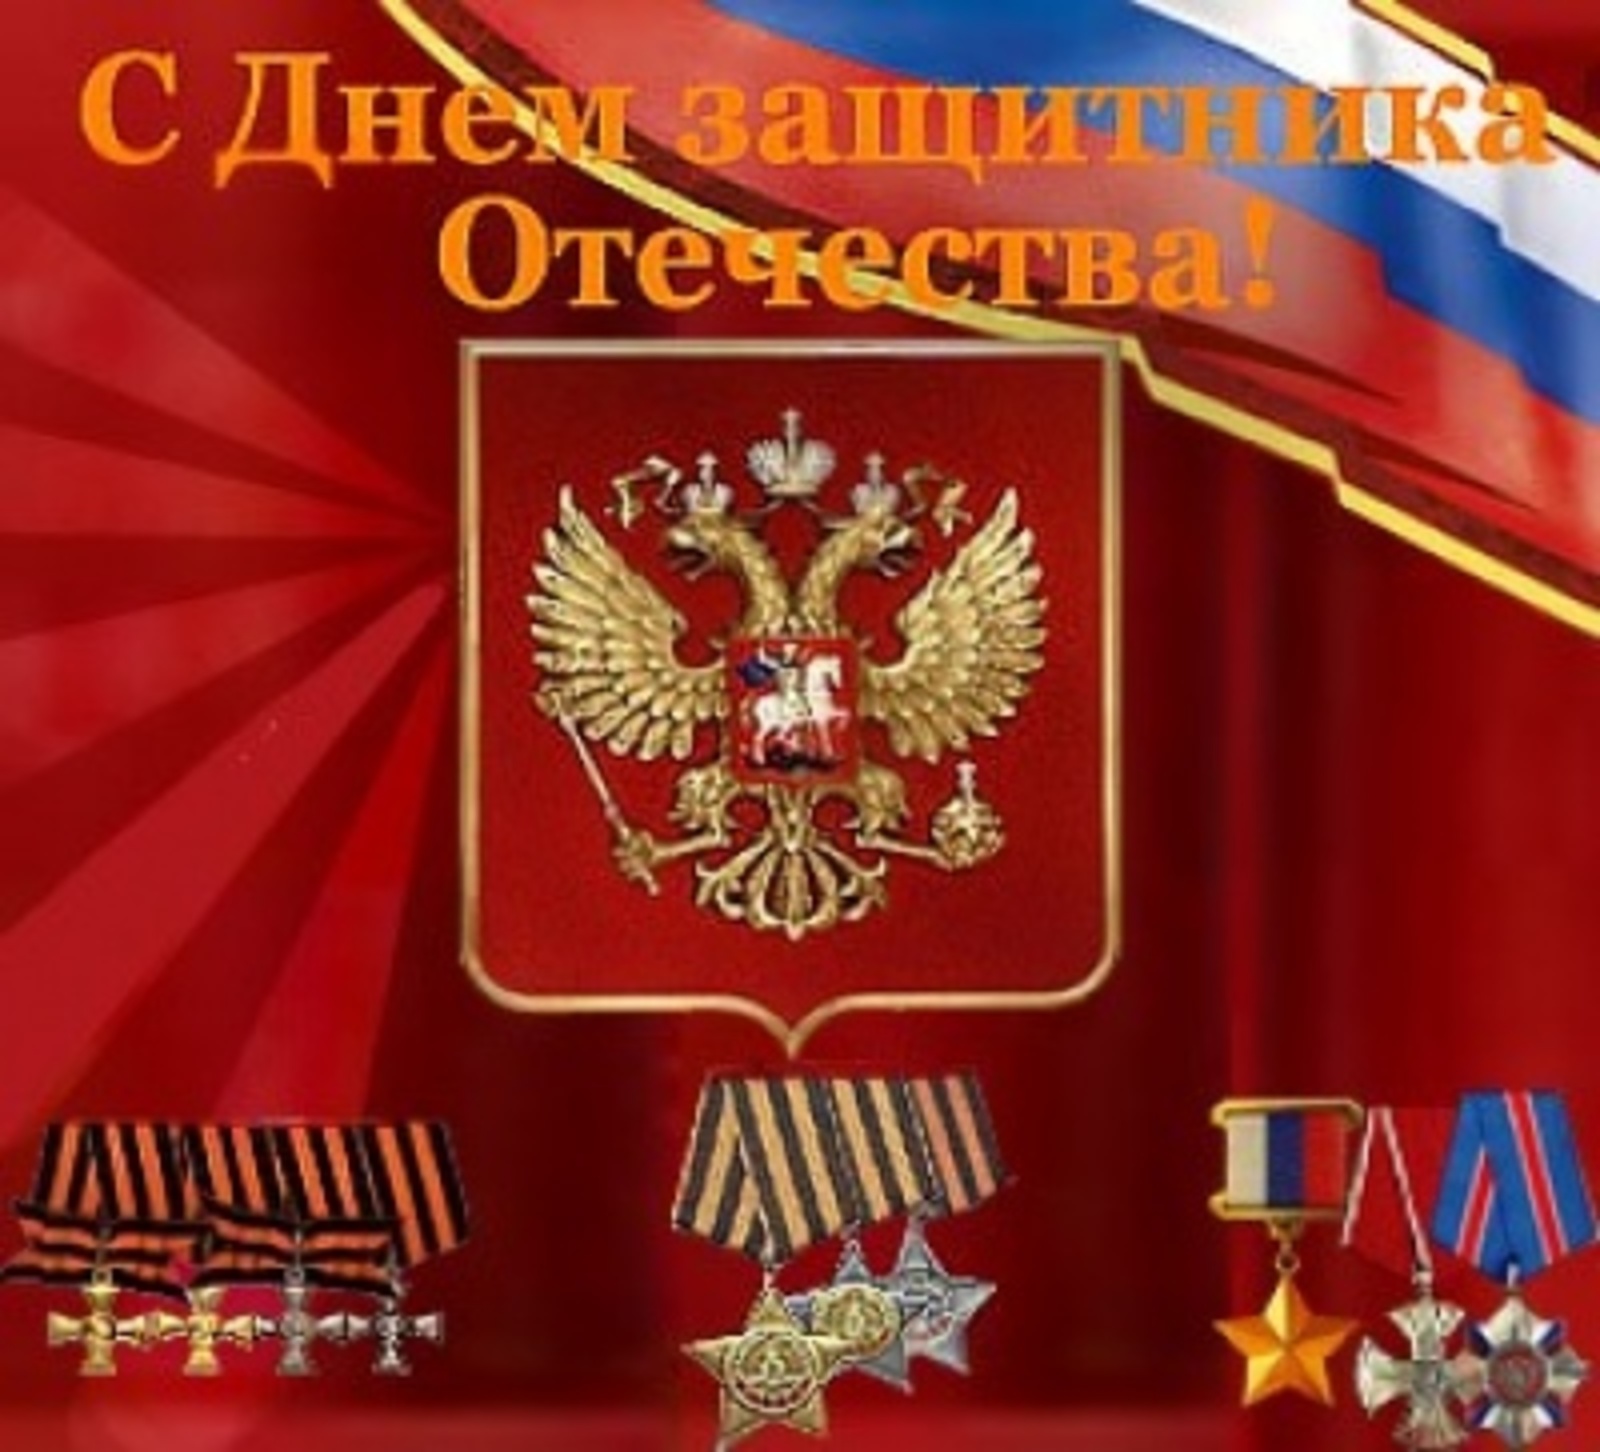 Фото с сайта www.penza-press.ru.